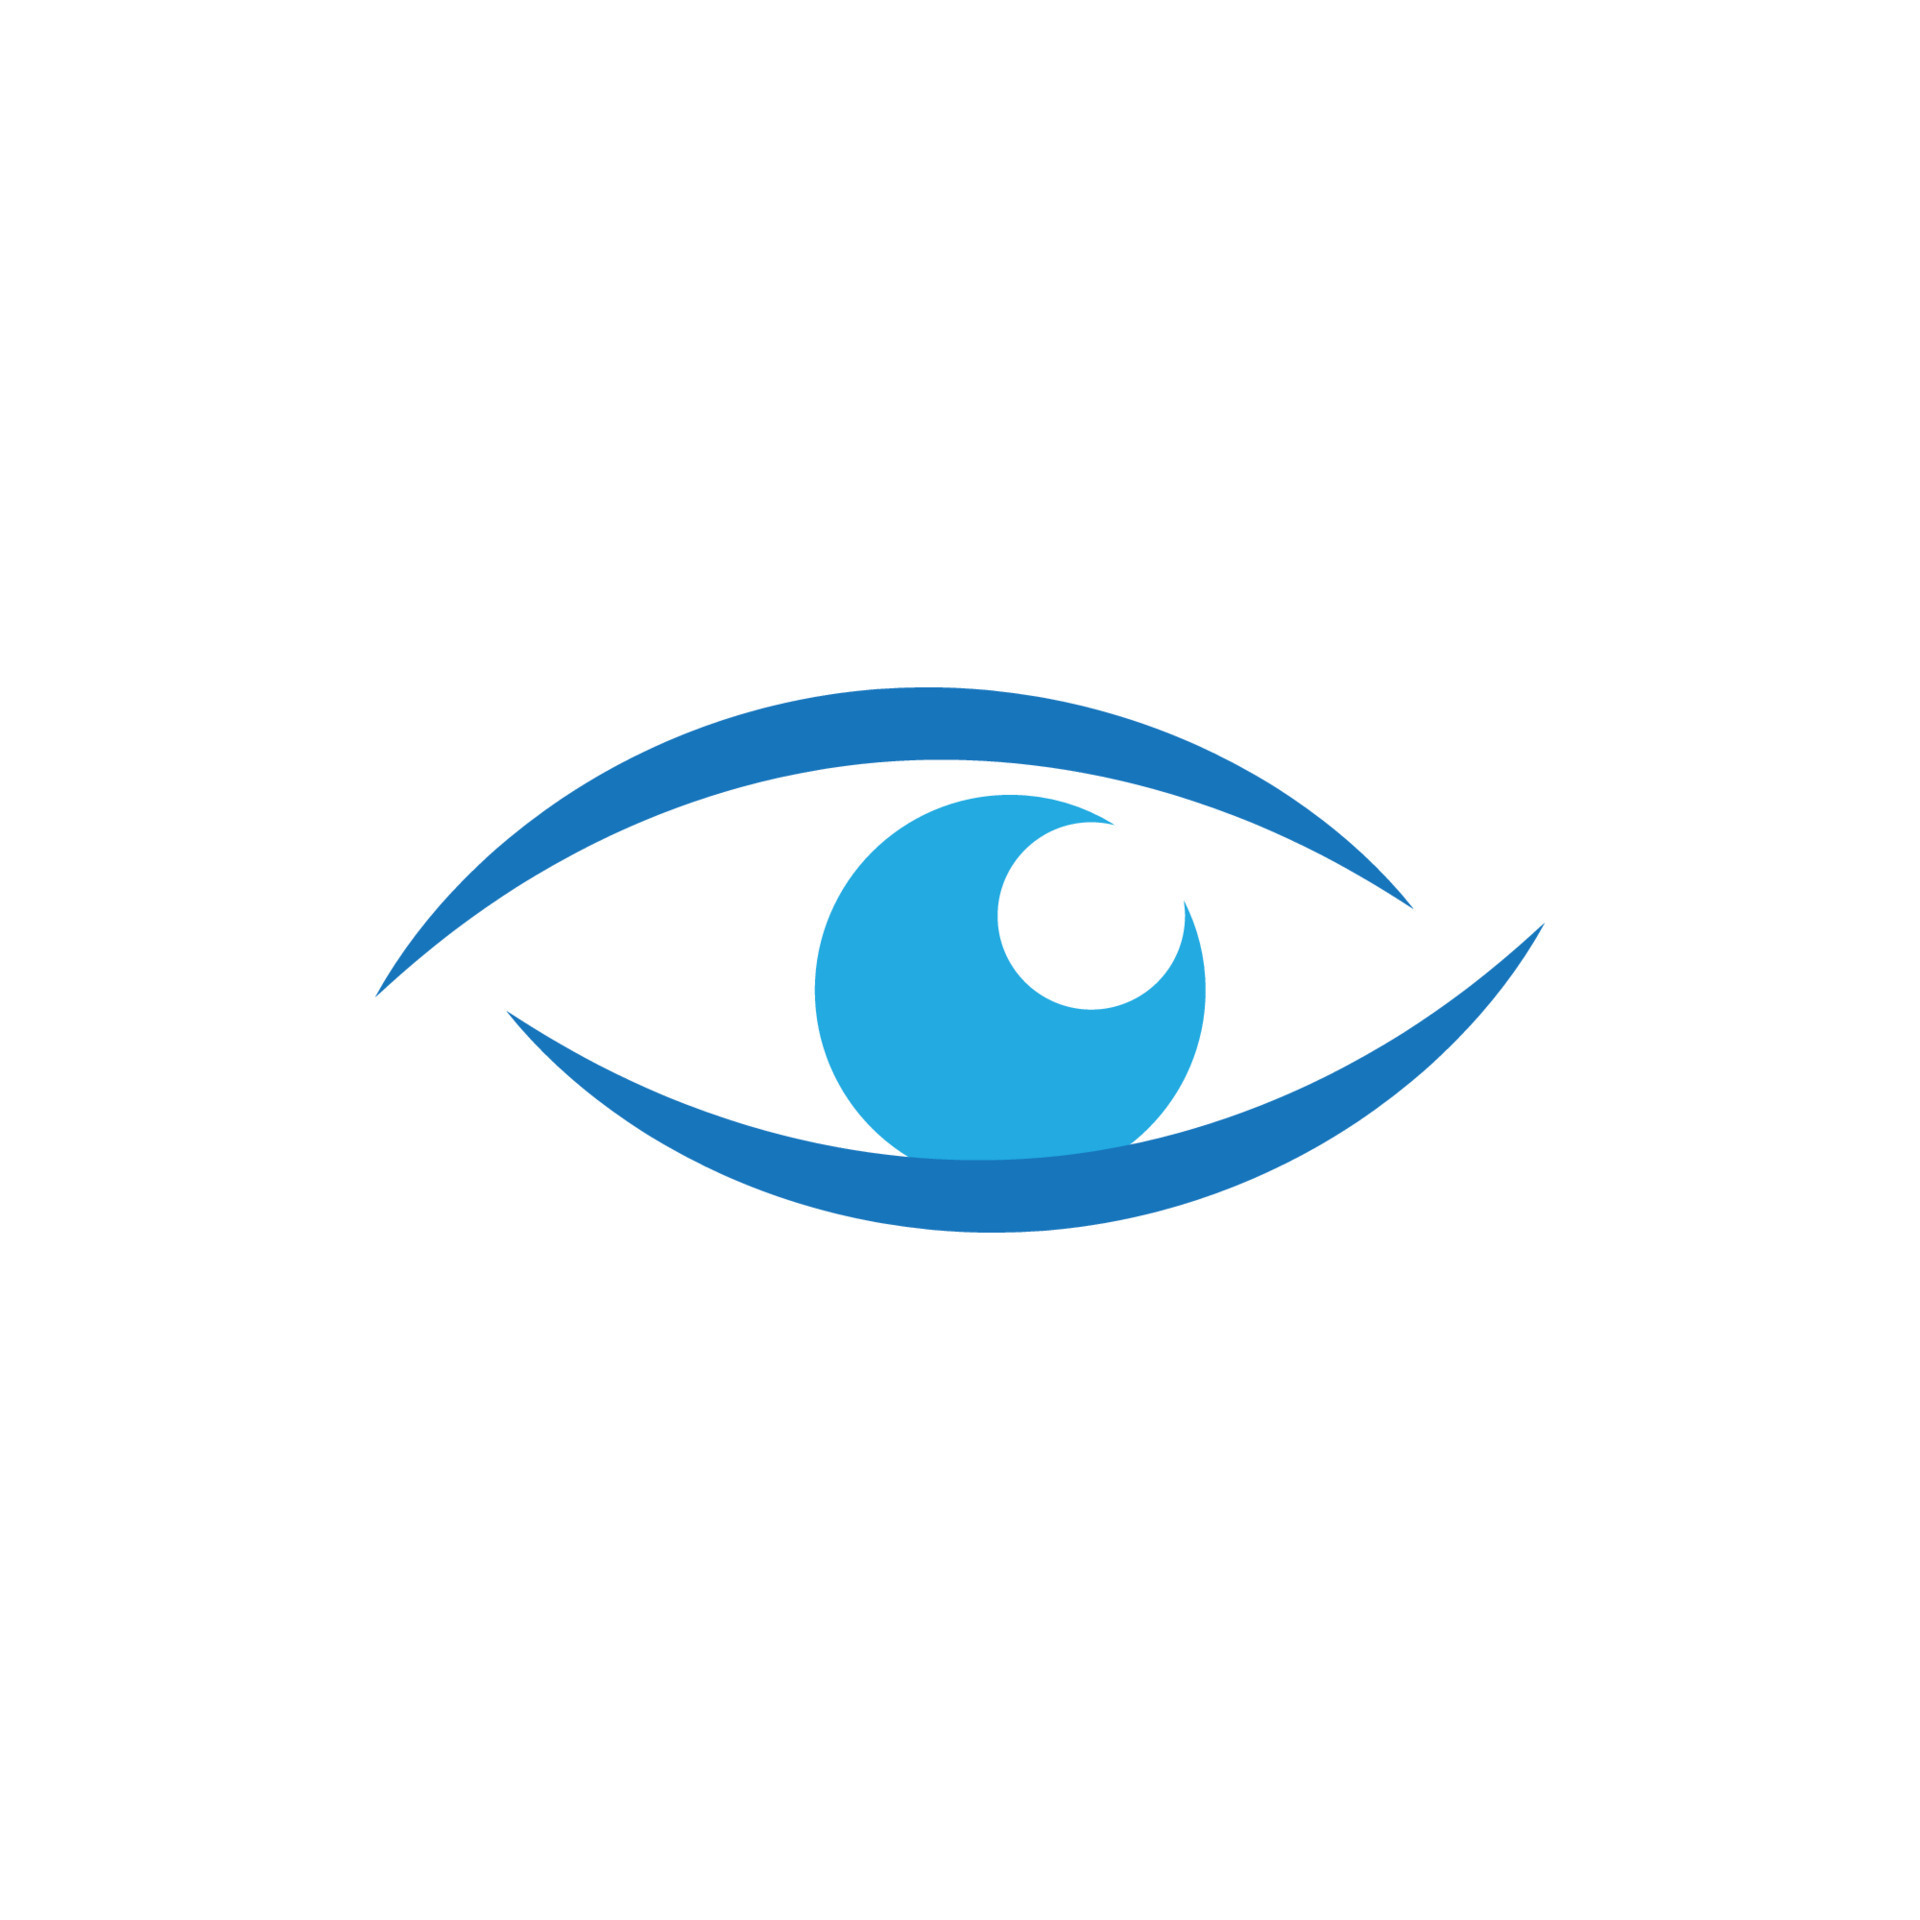 Branding Identity Corporate Eye Care vector logo design 13808228 Vector ...